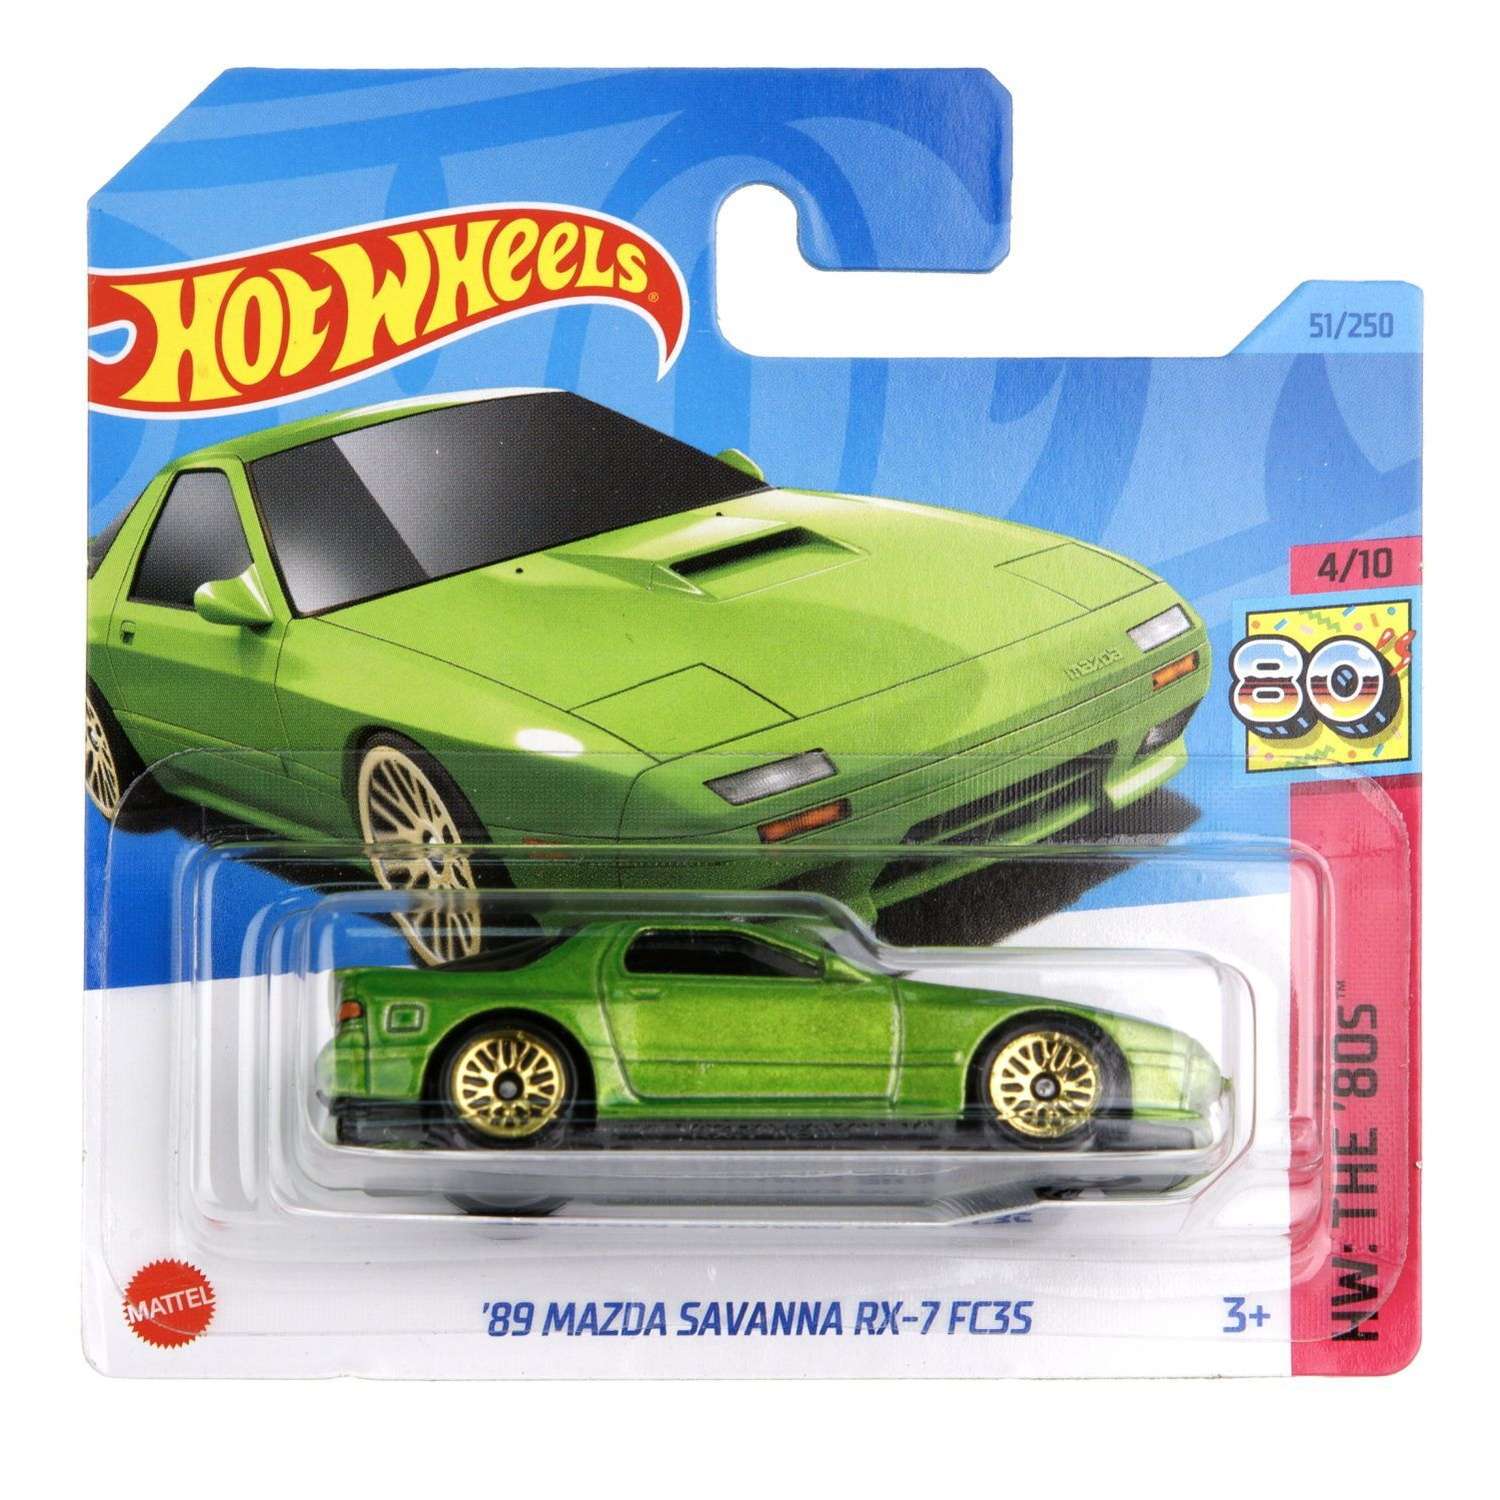 Машинка Hot Wheels 89 Mazda Savanna RX-7 FC3S серия HW the 80s 62940 - фото 1